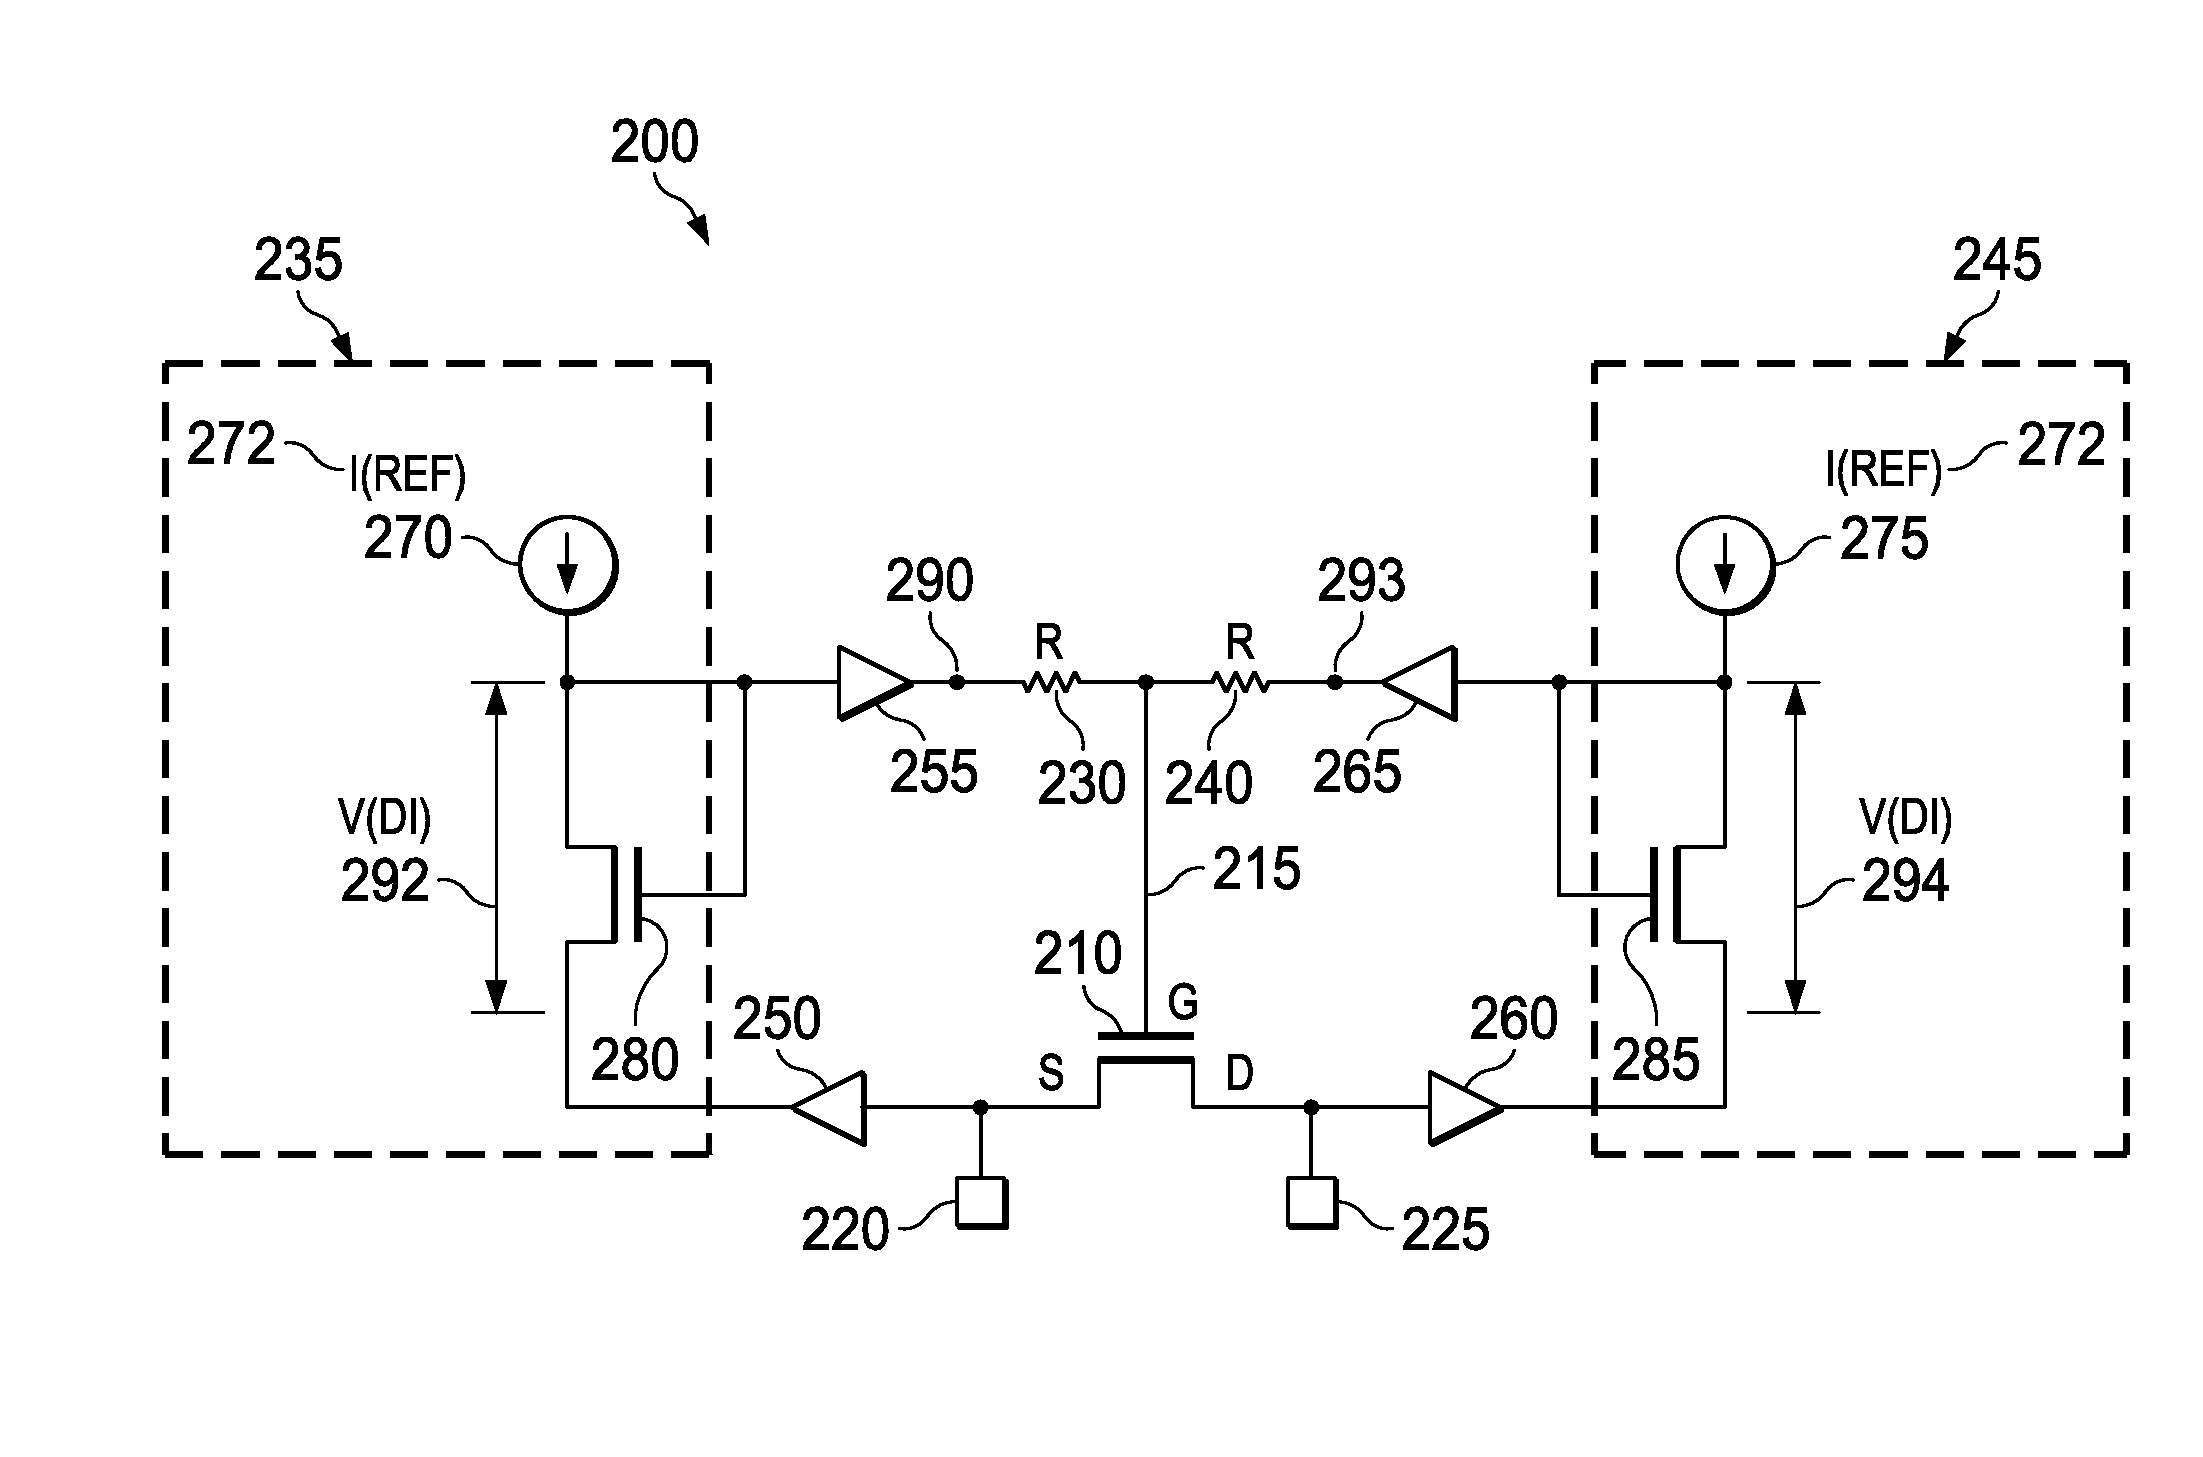 MOS resistor apparatus and methods